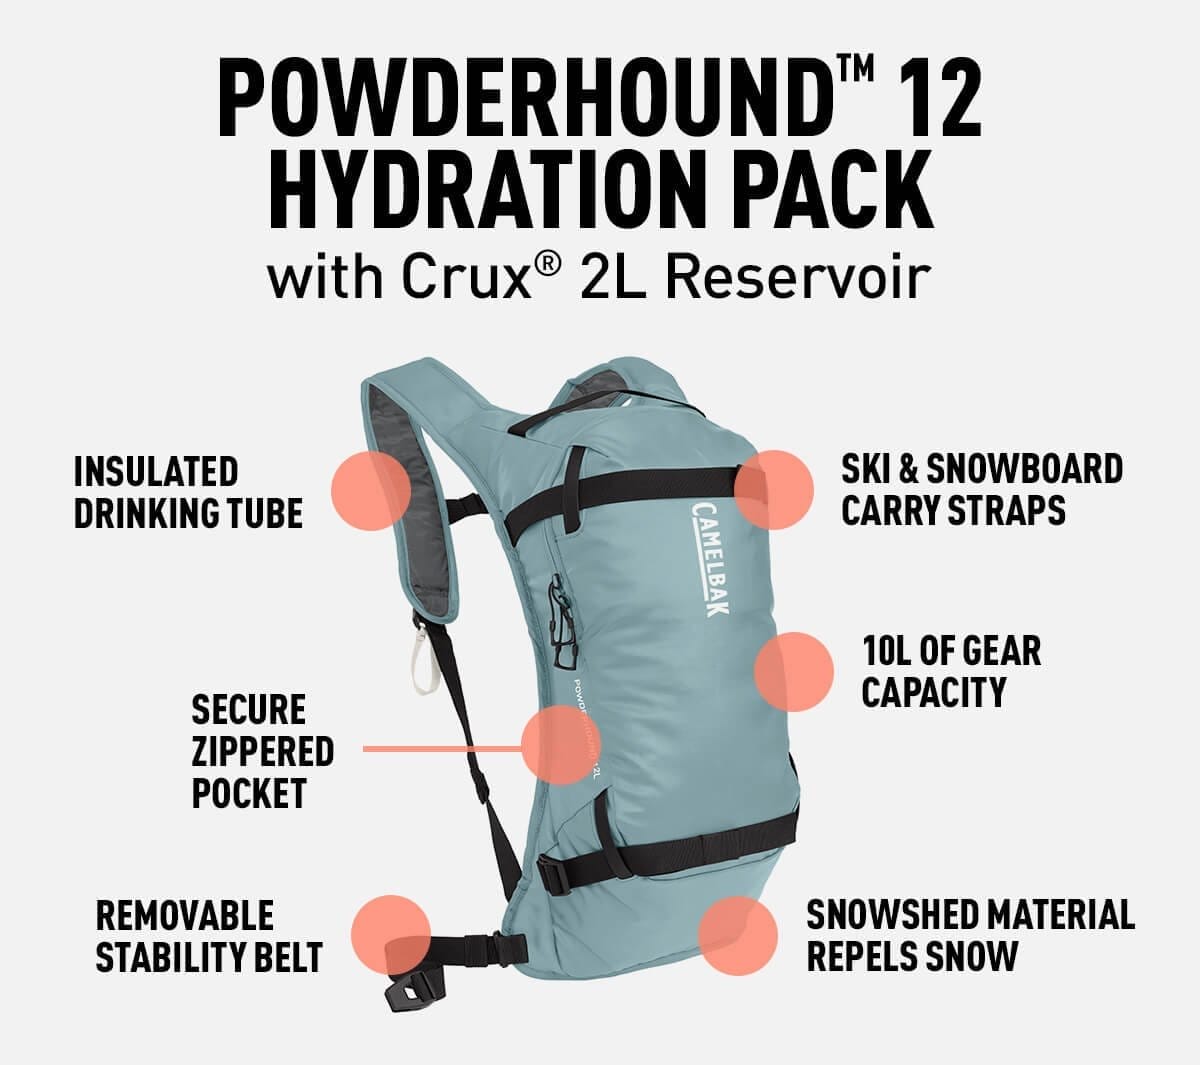 Powderhound ™ 12 Hydration Pack